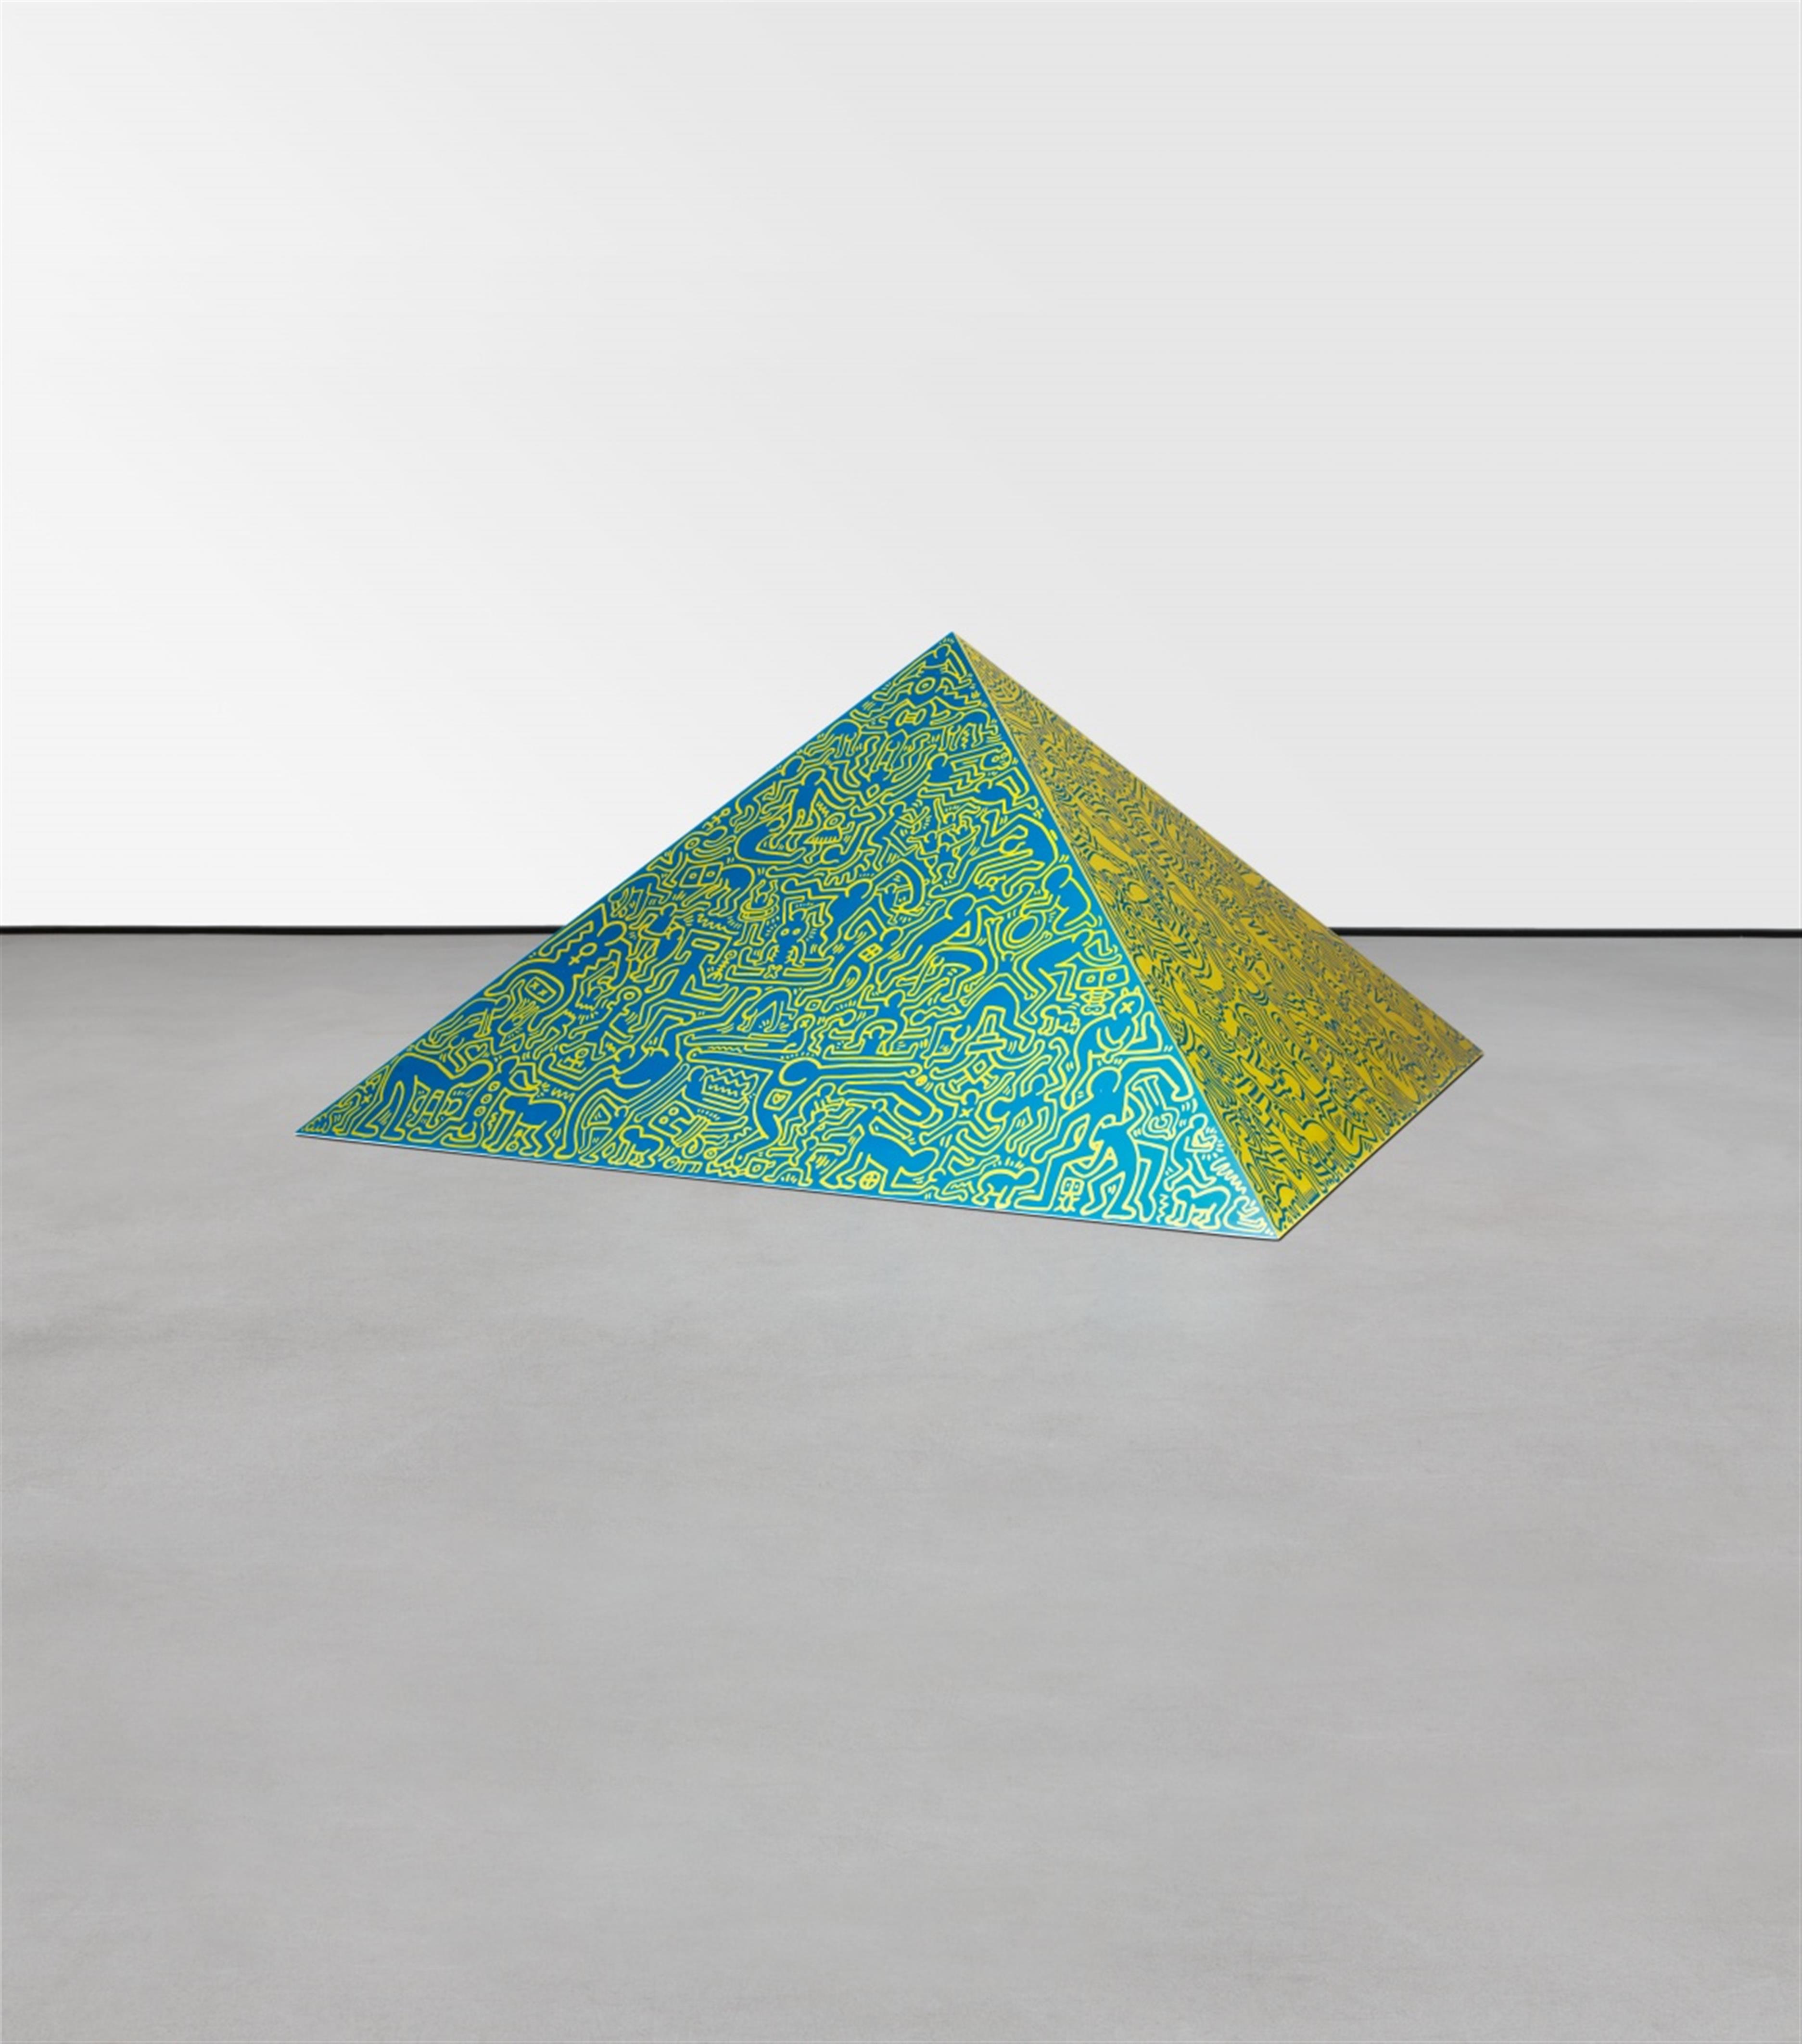 Keith Haring - Pyramid sculpture - image-1